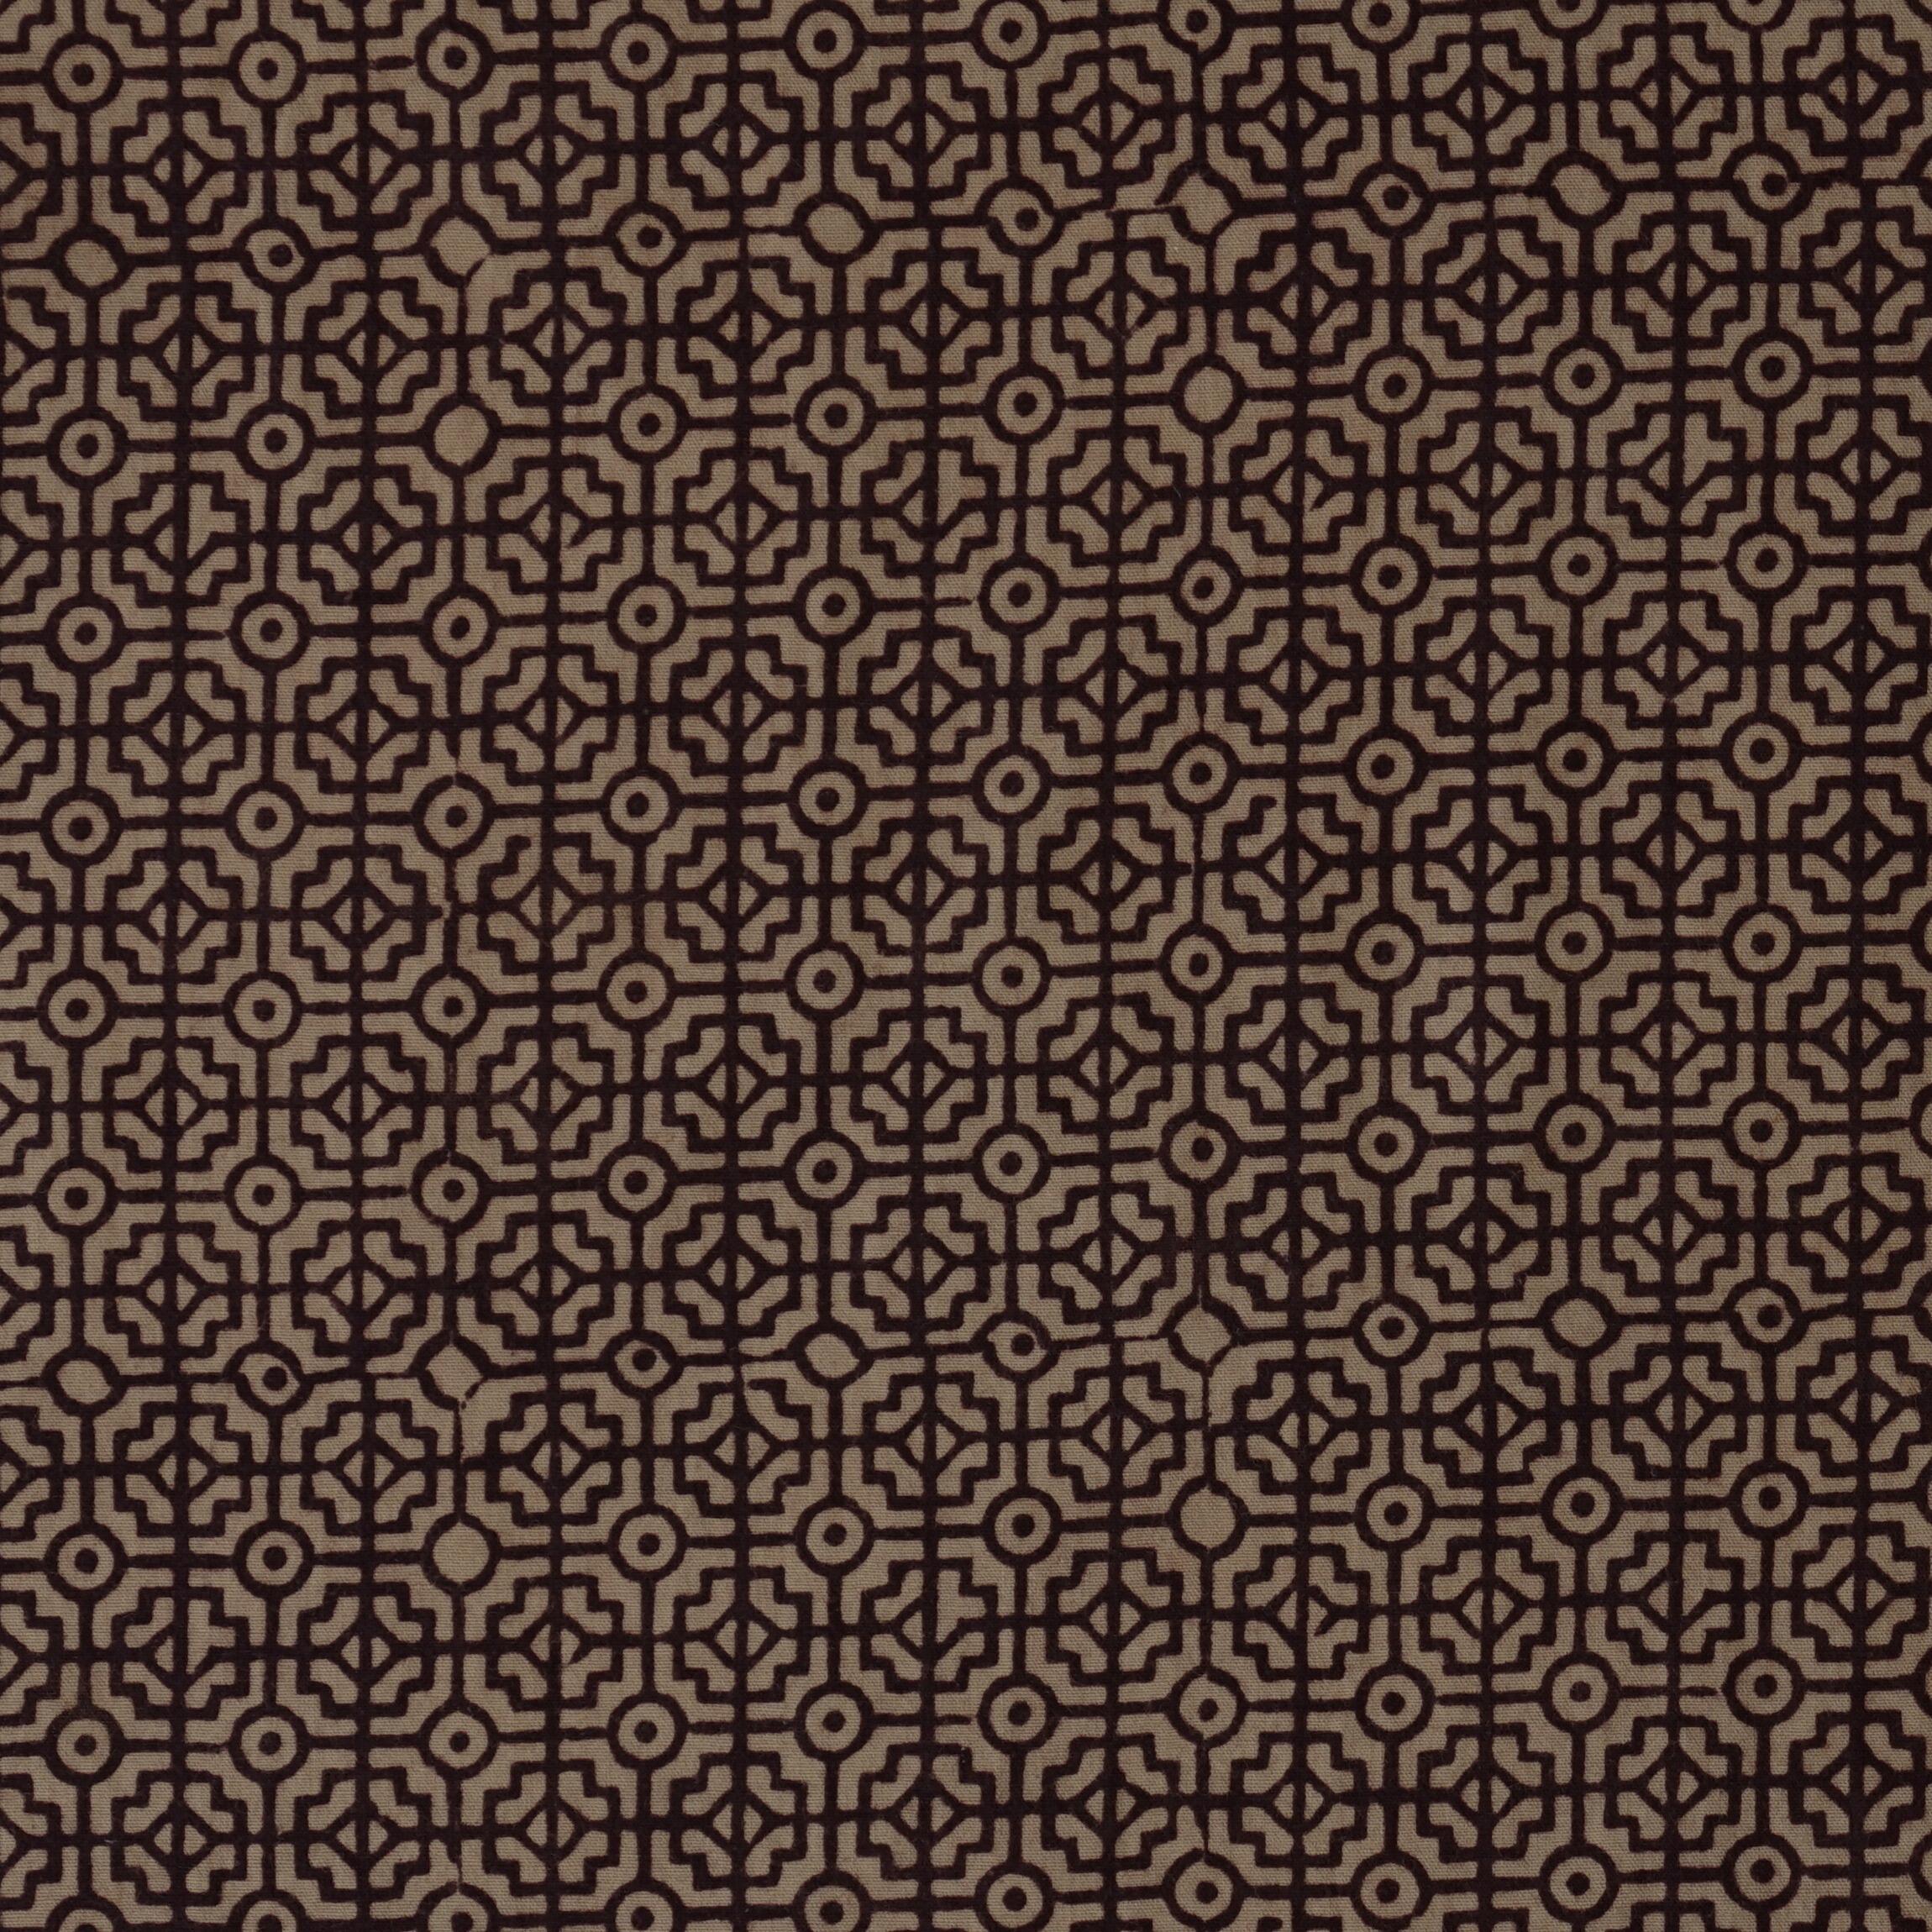 100% Block-Printed Cotton Fabric From India - Bagh Method - Iron Rust Black & Indigosol Khaki - Mystic Musings Print - Flat